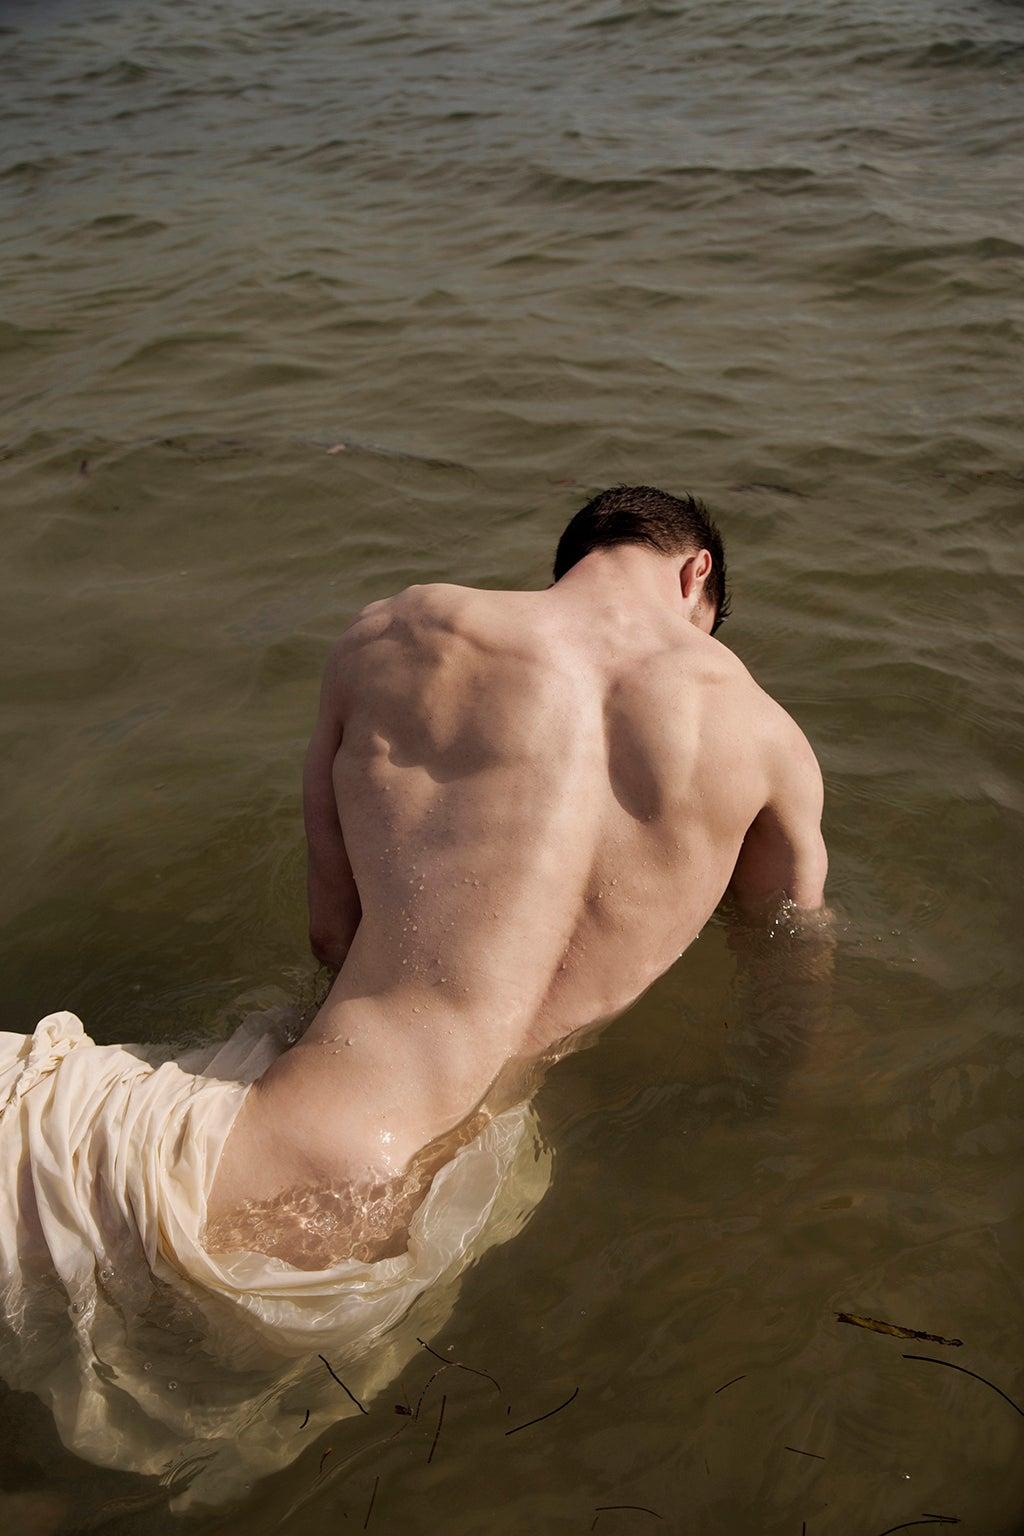 Ricky Cohete Nude Photograph – Rafael. Nacktheit. Nackt. Farbfotografie in limitierter Auflage. Klein